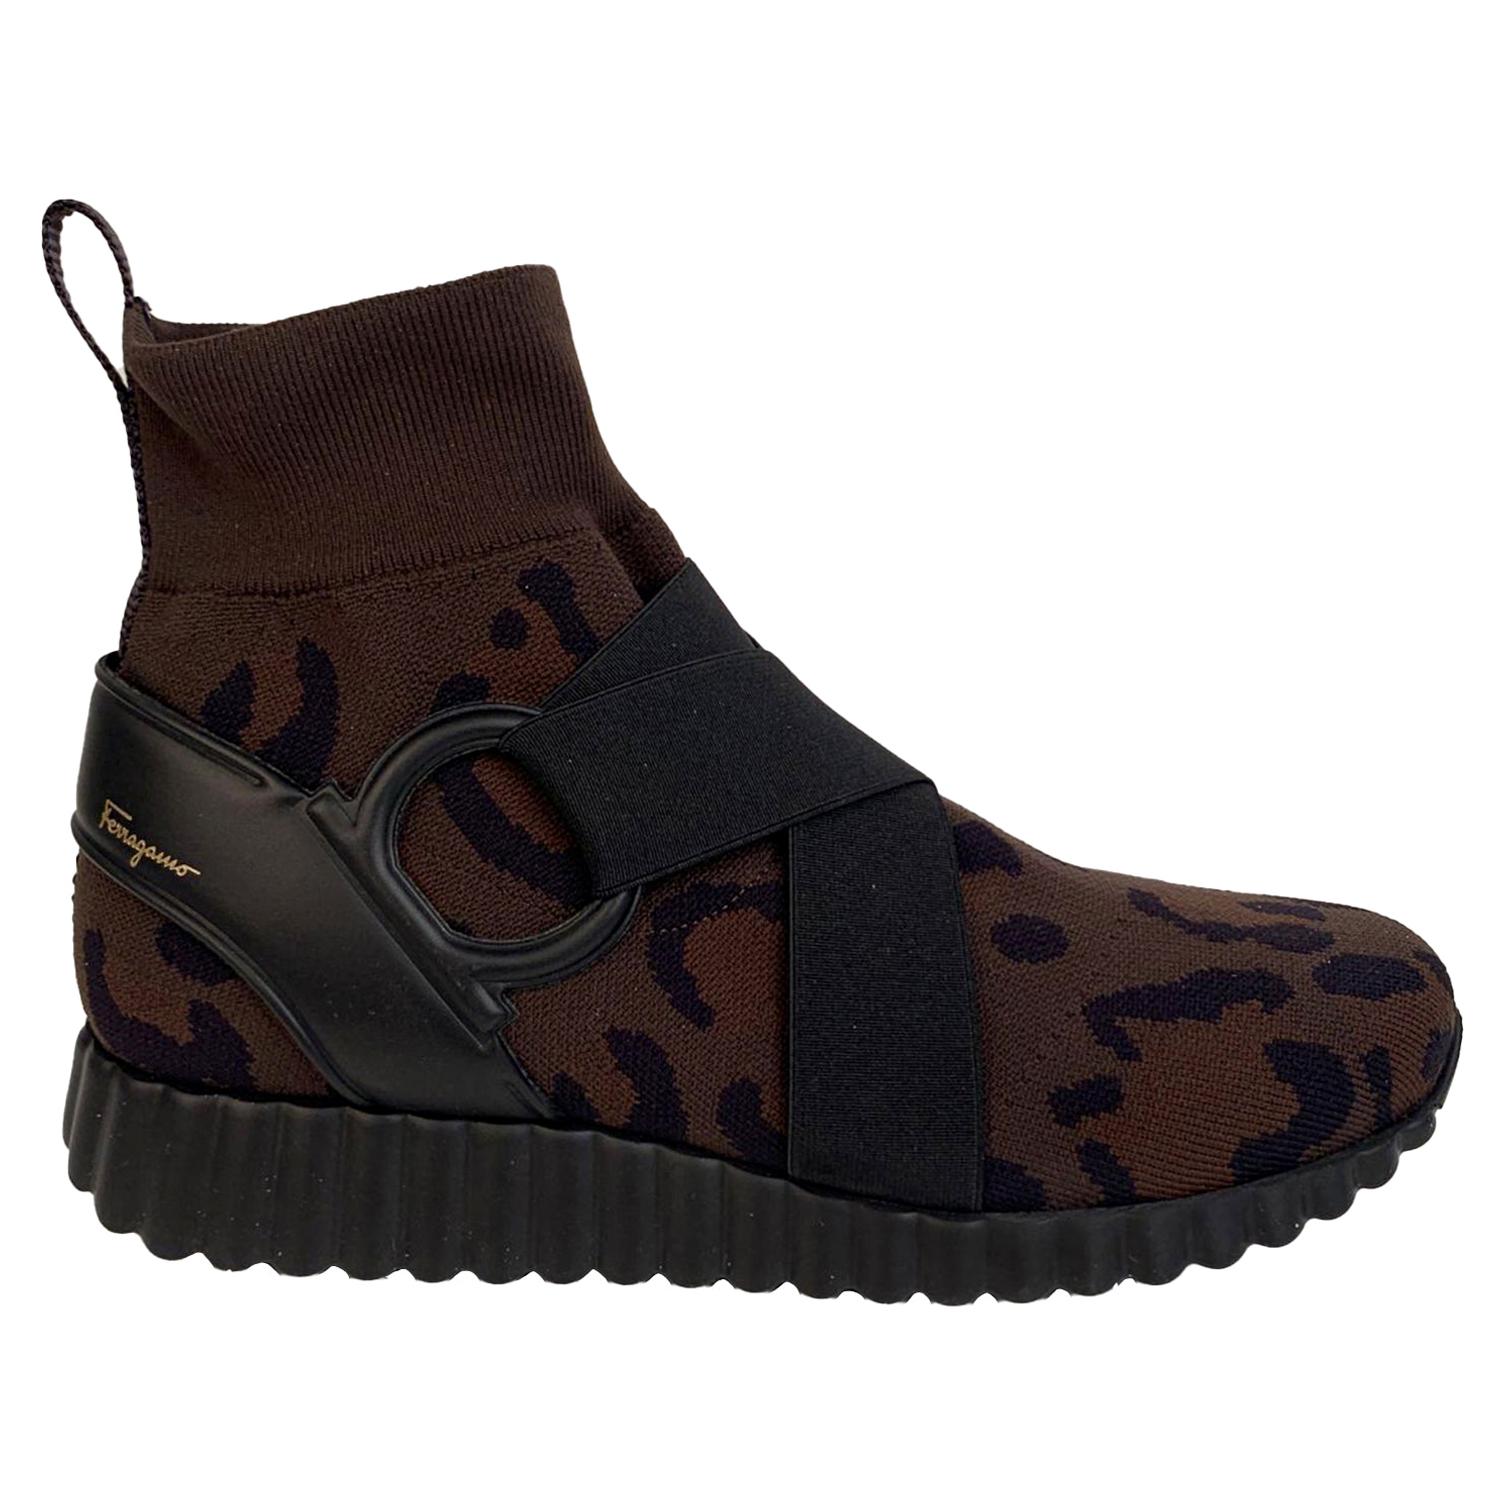 Salvatore Ferragamo Leopard Noto Sock Sneakers Shoes Size 9C 39.5C